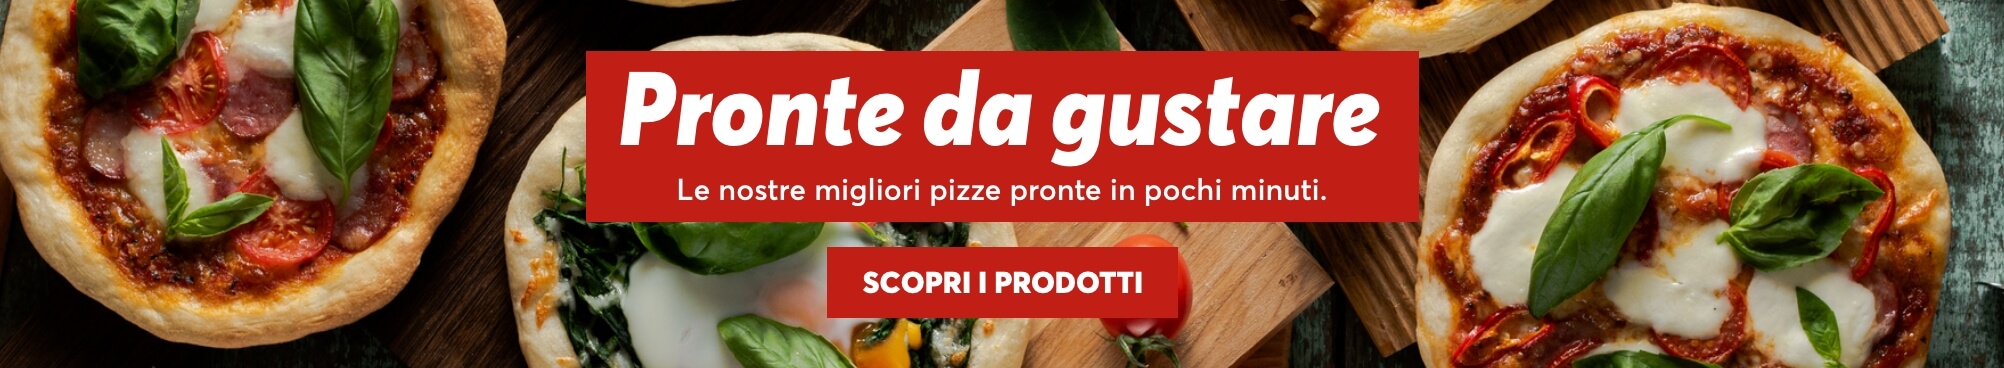 Promo pizze pronte_pag pizza_desktop.jpg